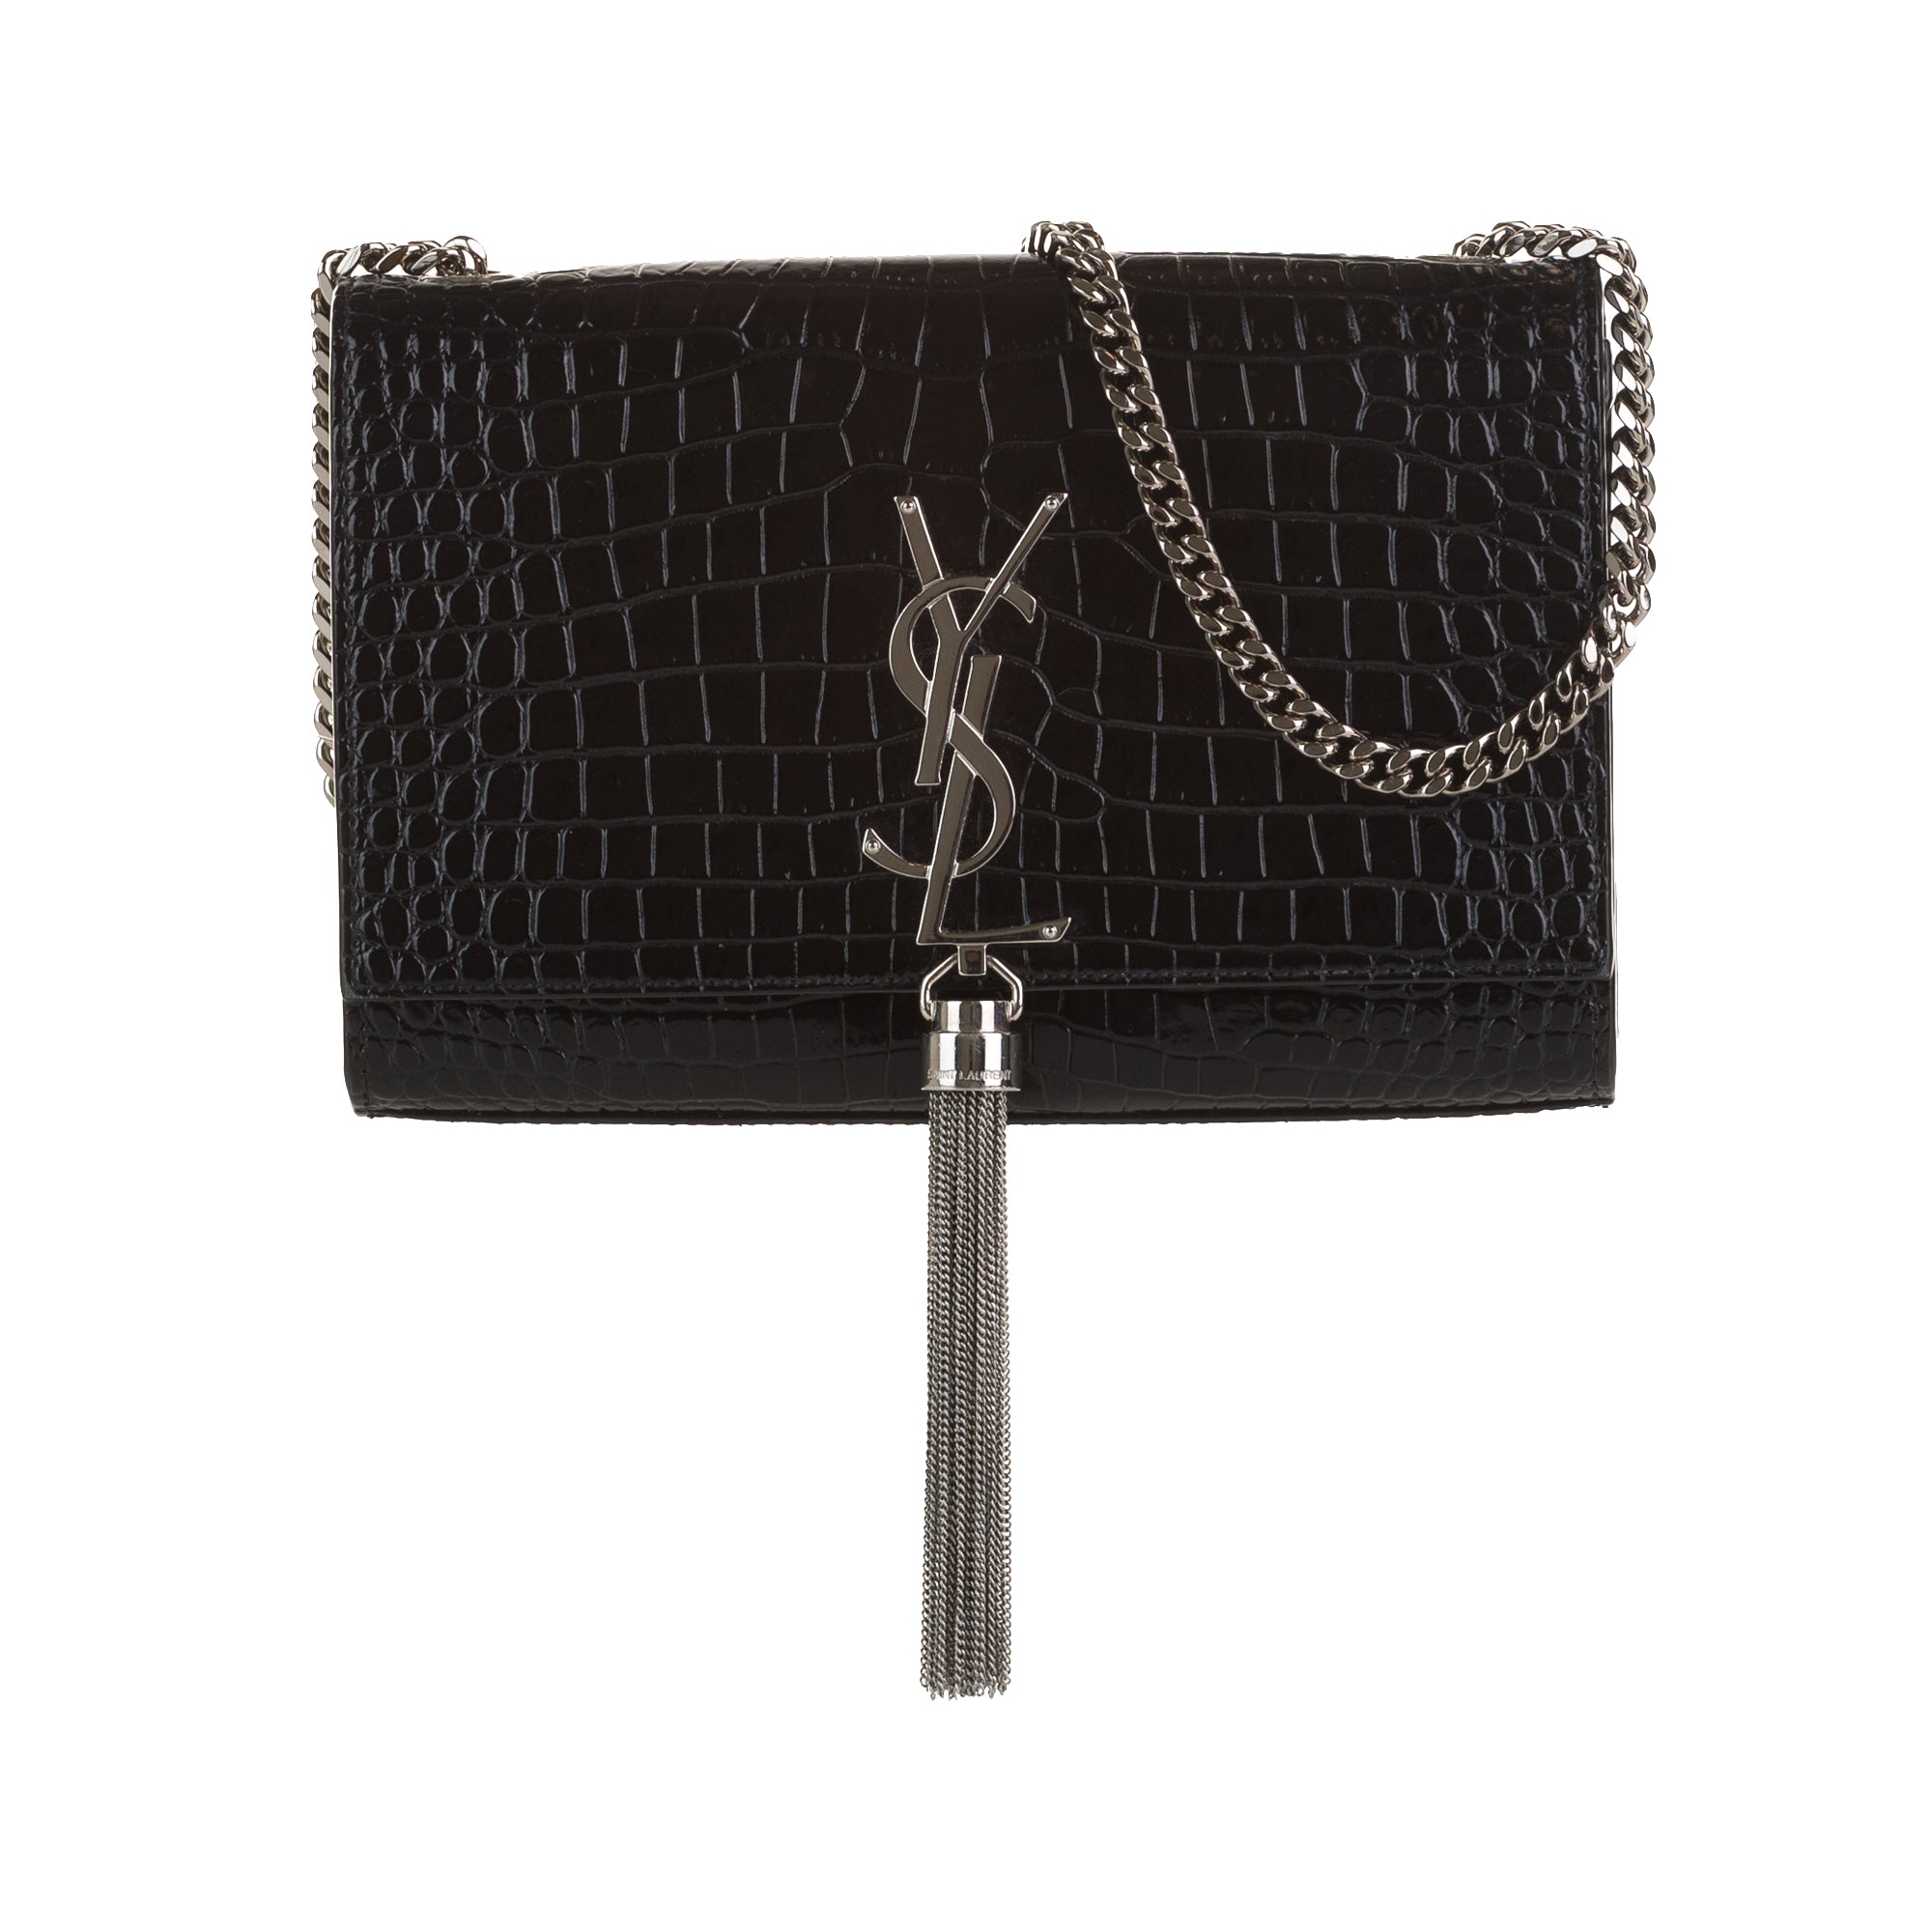 SAINT LAURENT Saint Laurent Monogram Kate Small Tassel Bag Black Croc - Vault 55